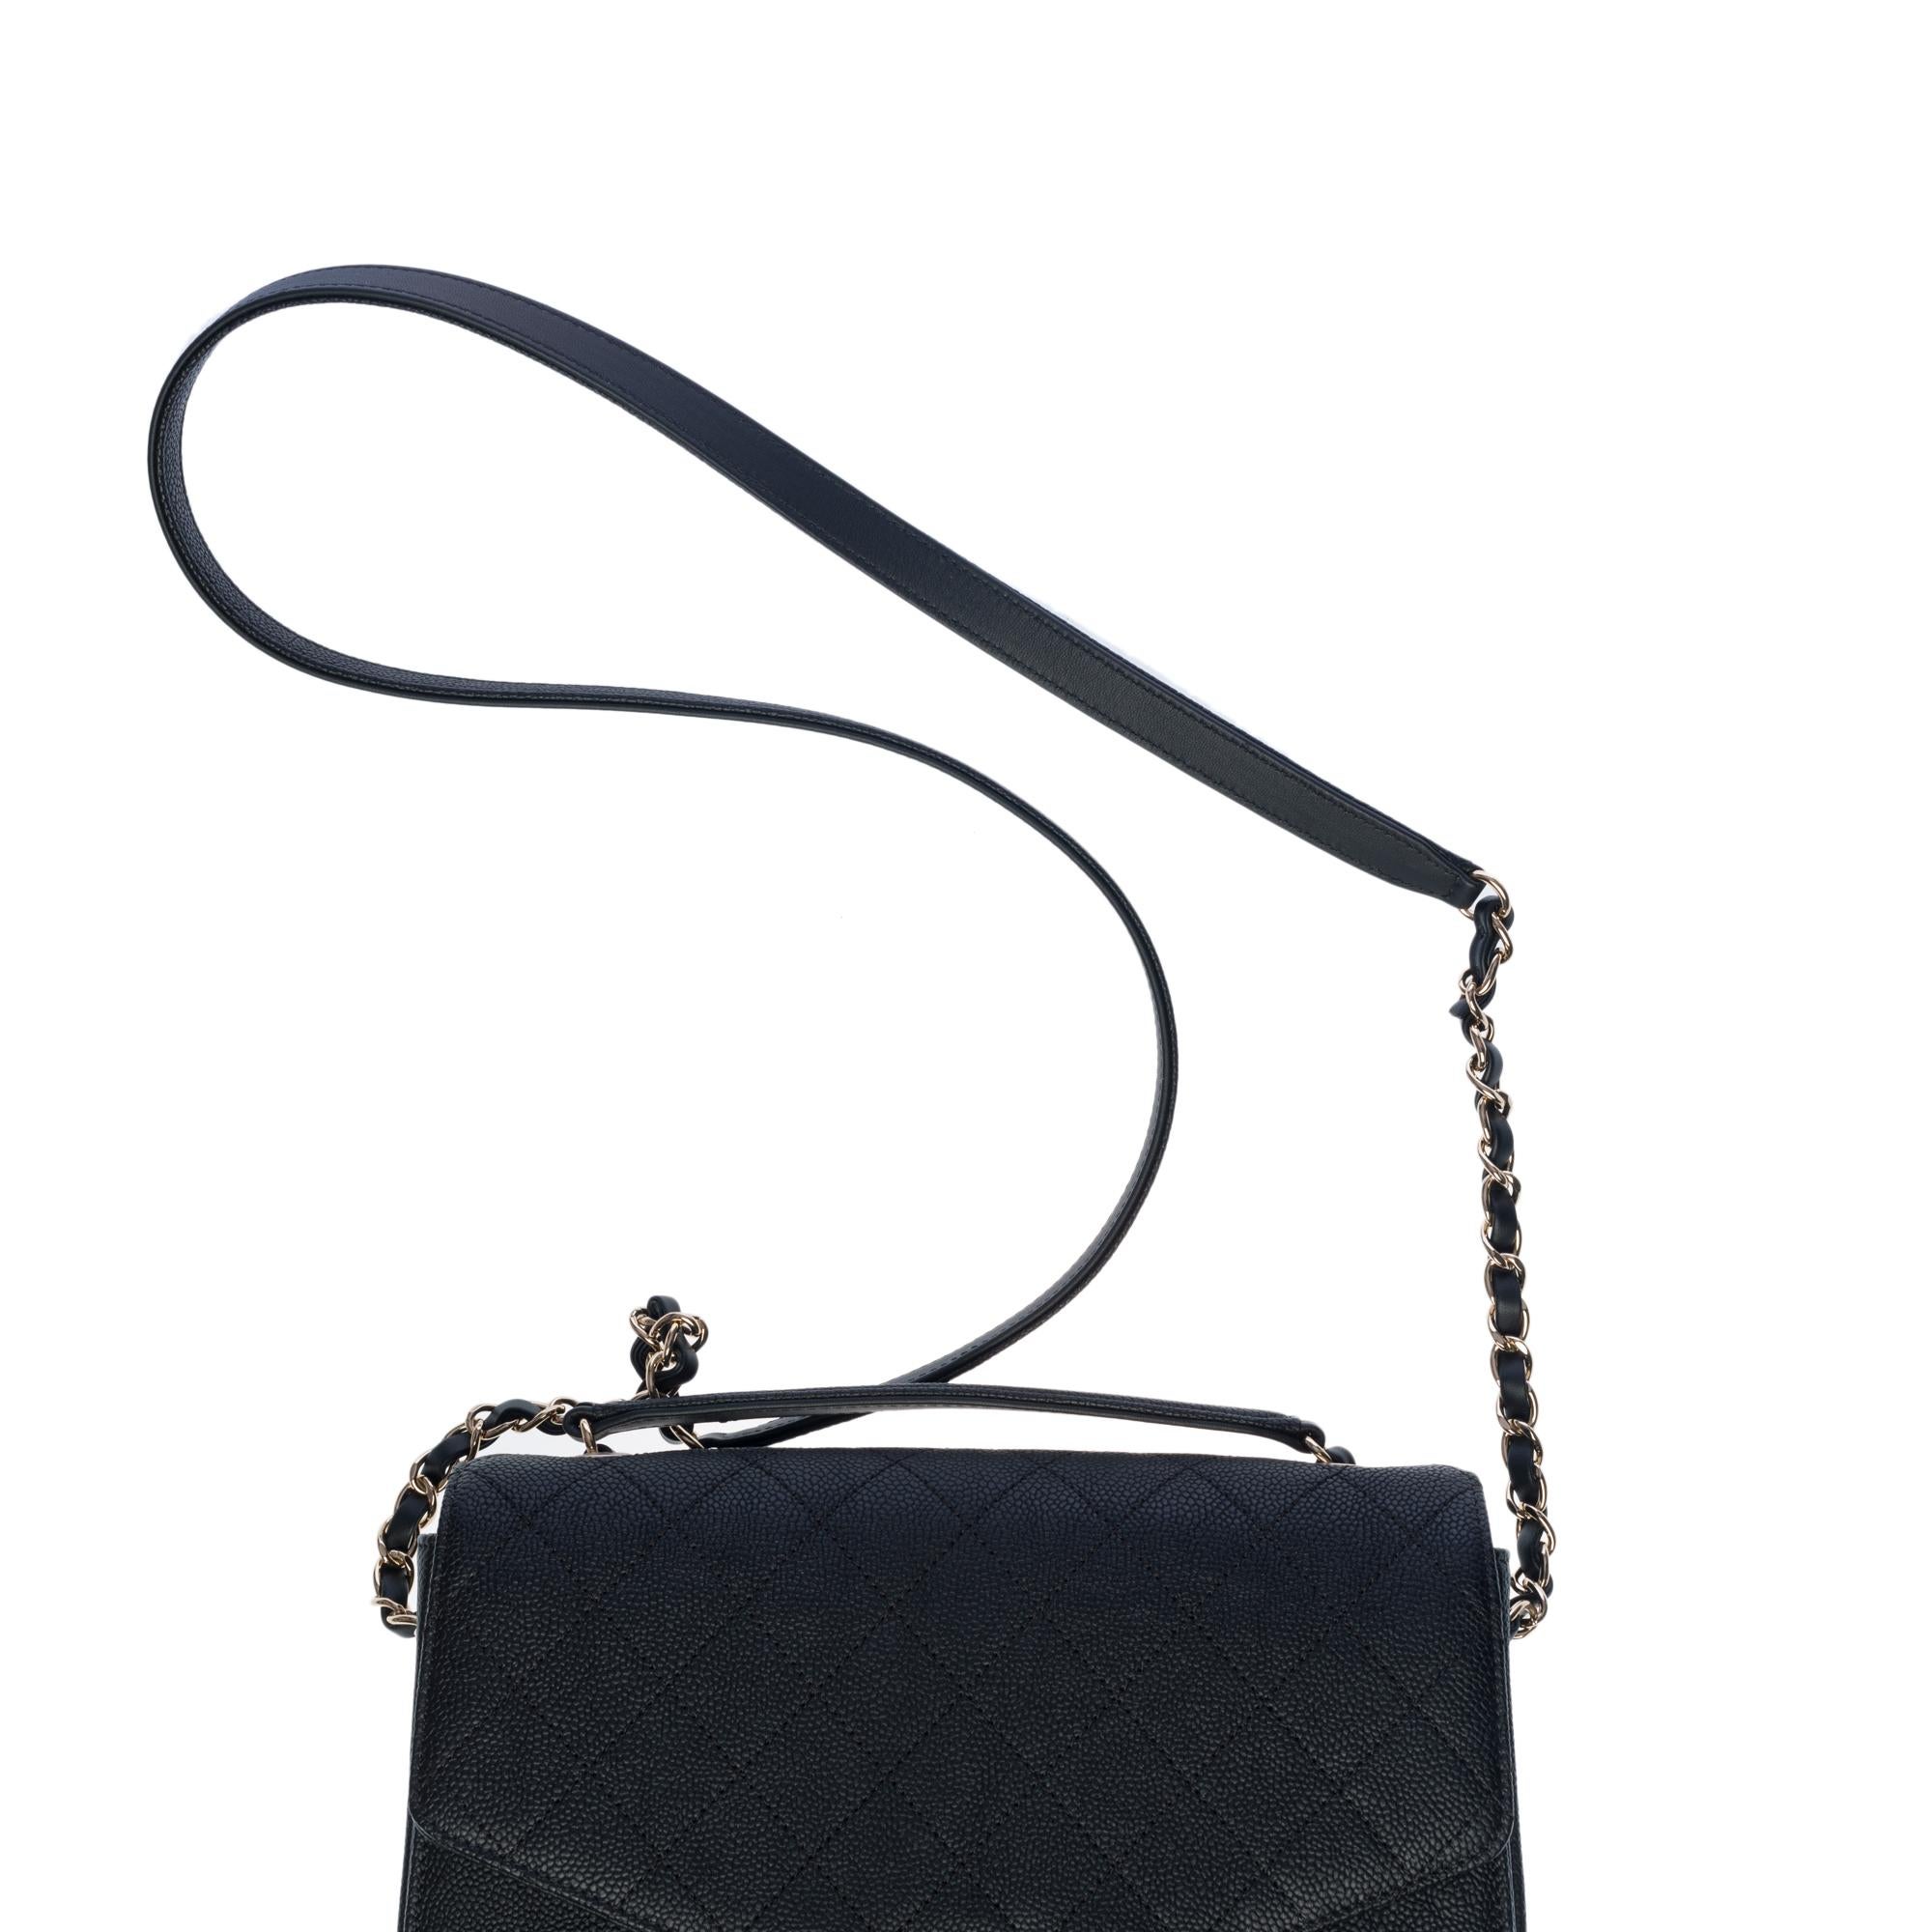 RARE Chanel Coco Cuba Medium flap bag in black caviar leather, Champagne HW  For Sale 1